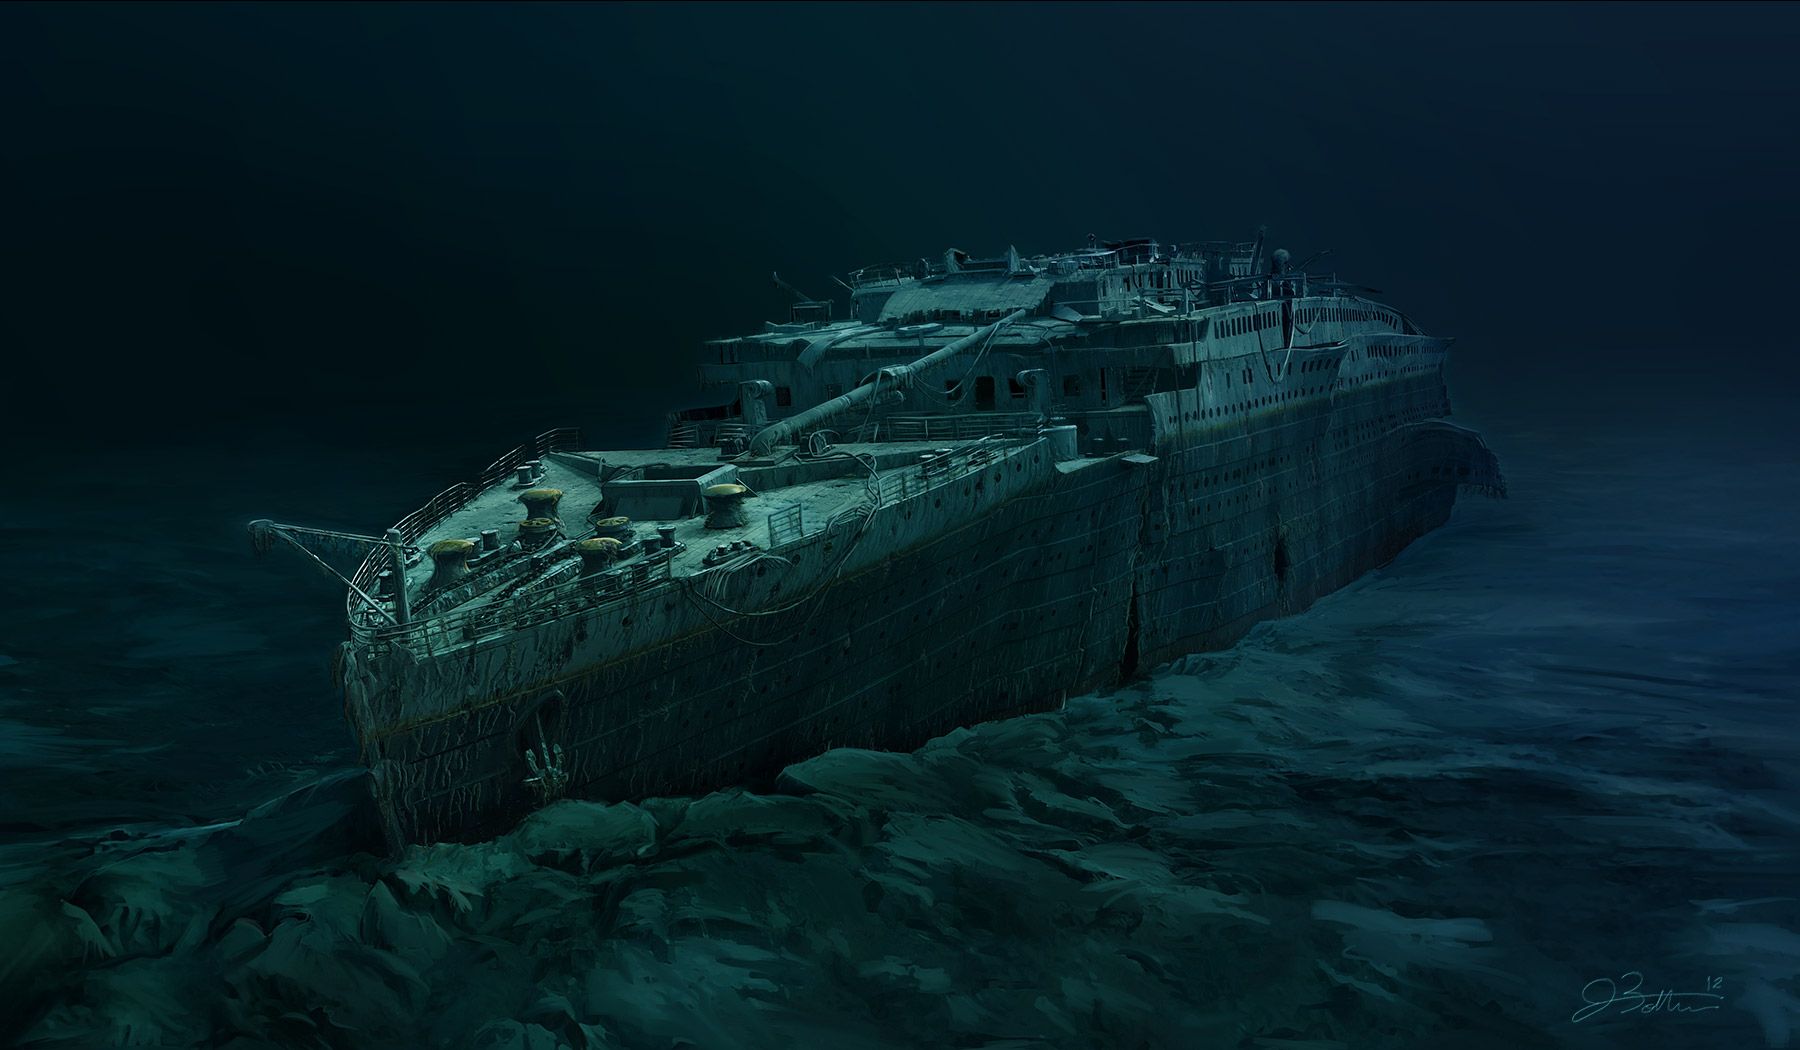 Корабли лежащие на дне. Затонувший Титаник 2022. Титаник сейчас 2020. Затонувшие корабли Титаник. Титаник Британик Олимпик на дне.